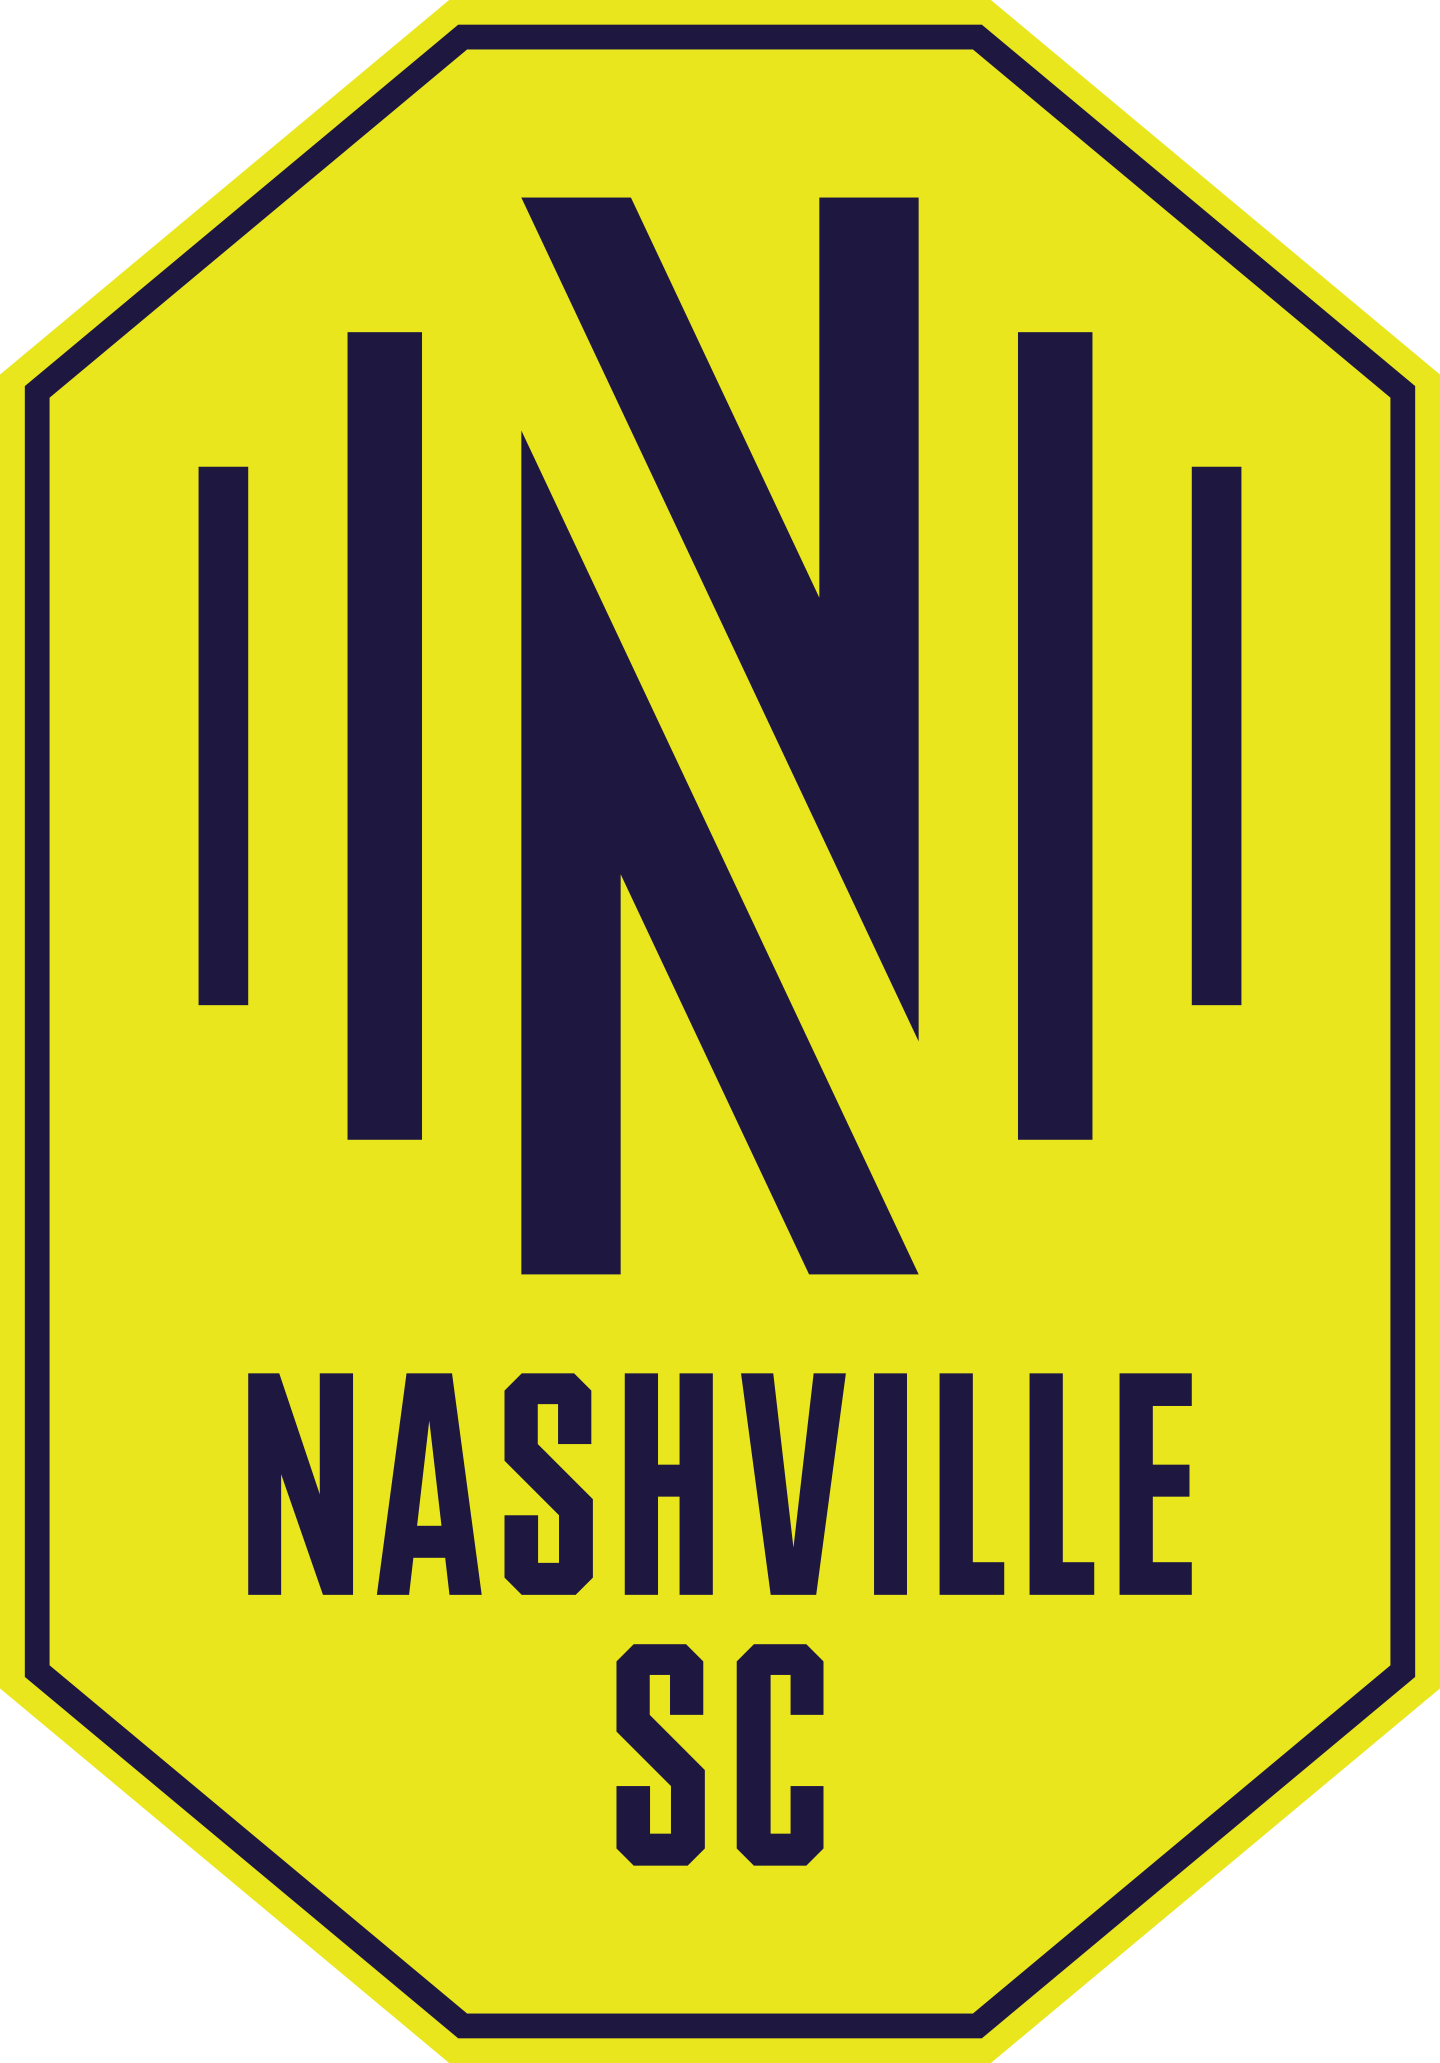 nashville soccer club logo 2 - Nashville Soccer Club logo